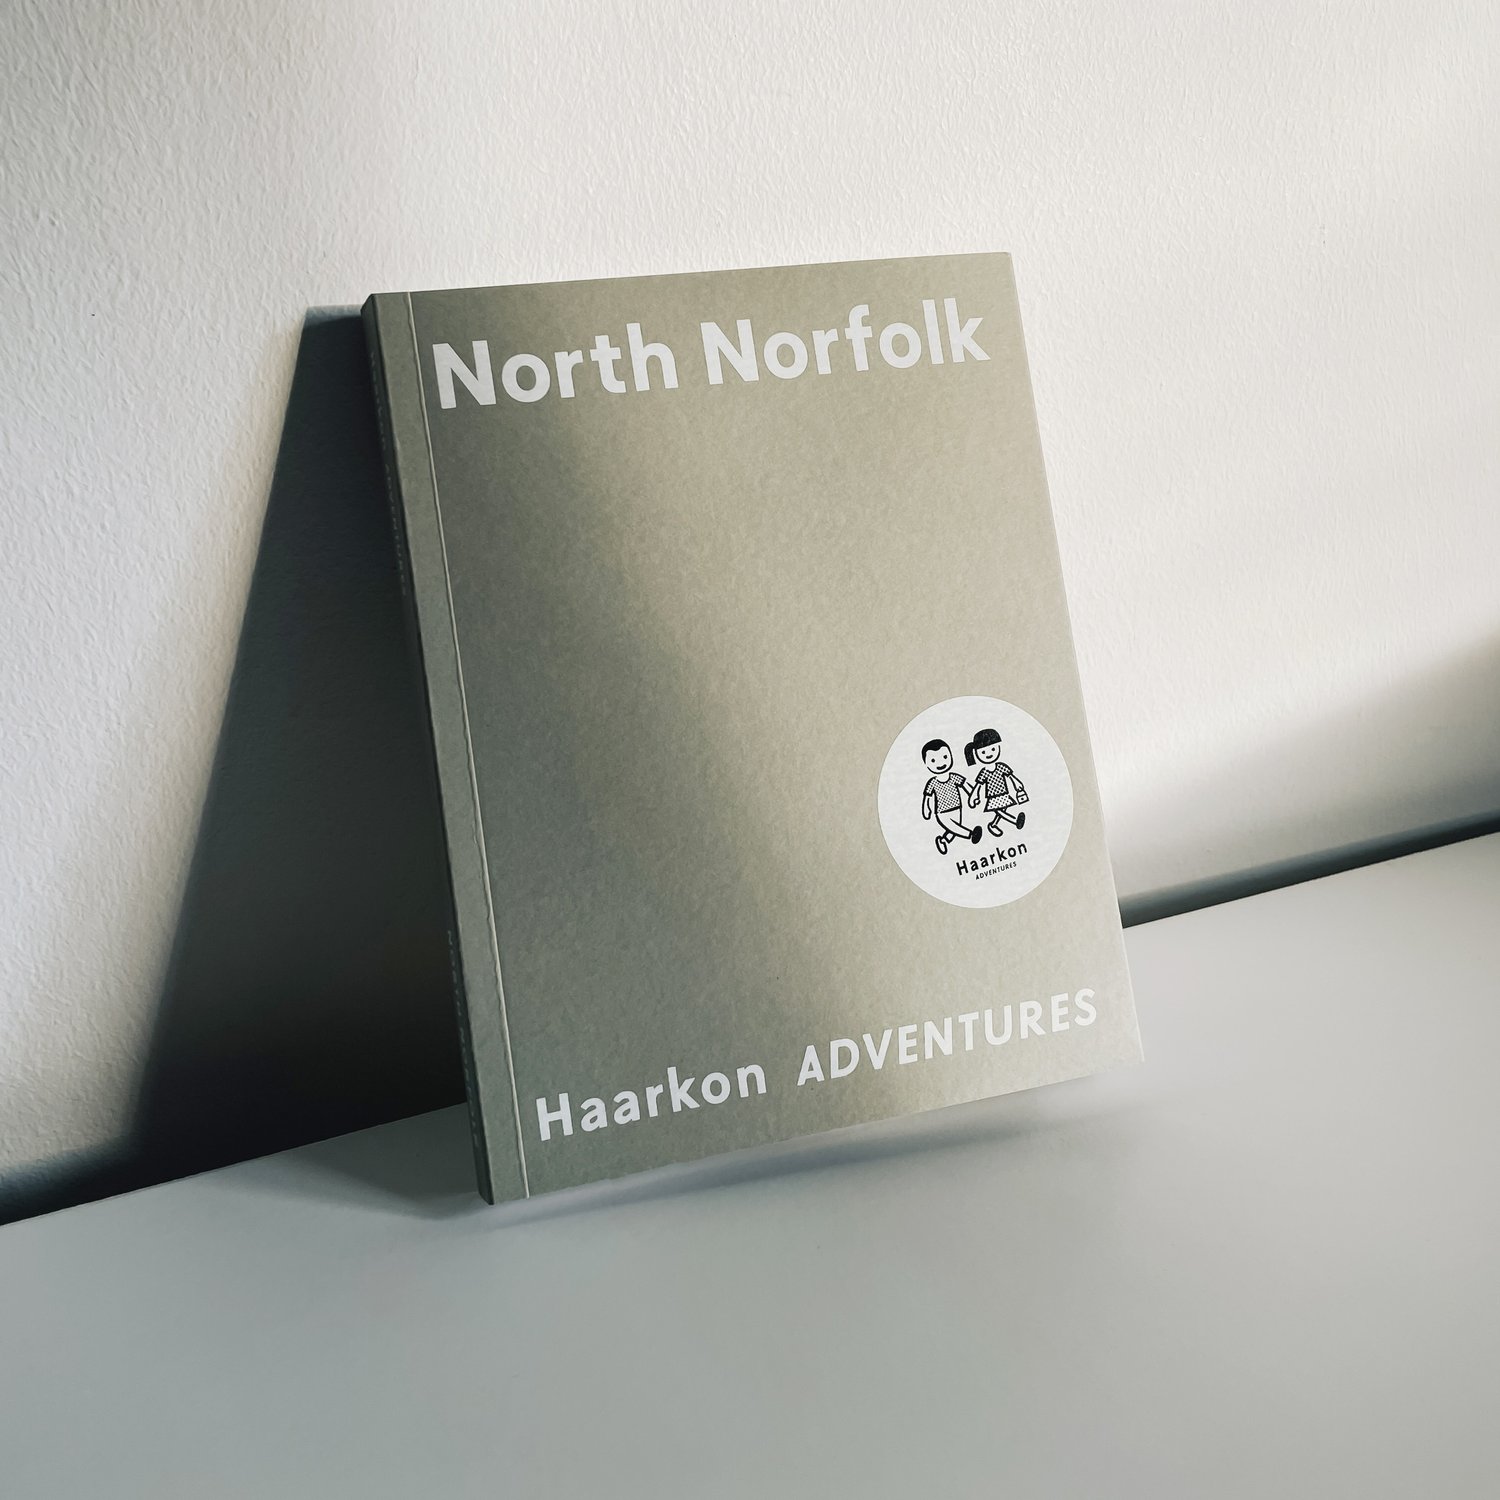 Haarkon Adventures North Norfolk photo